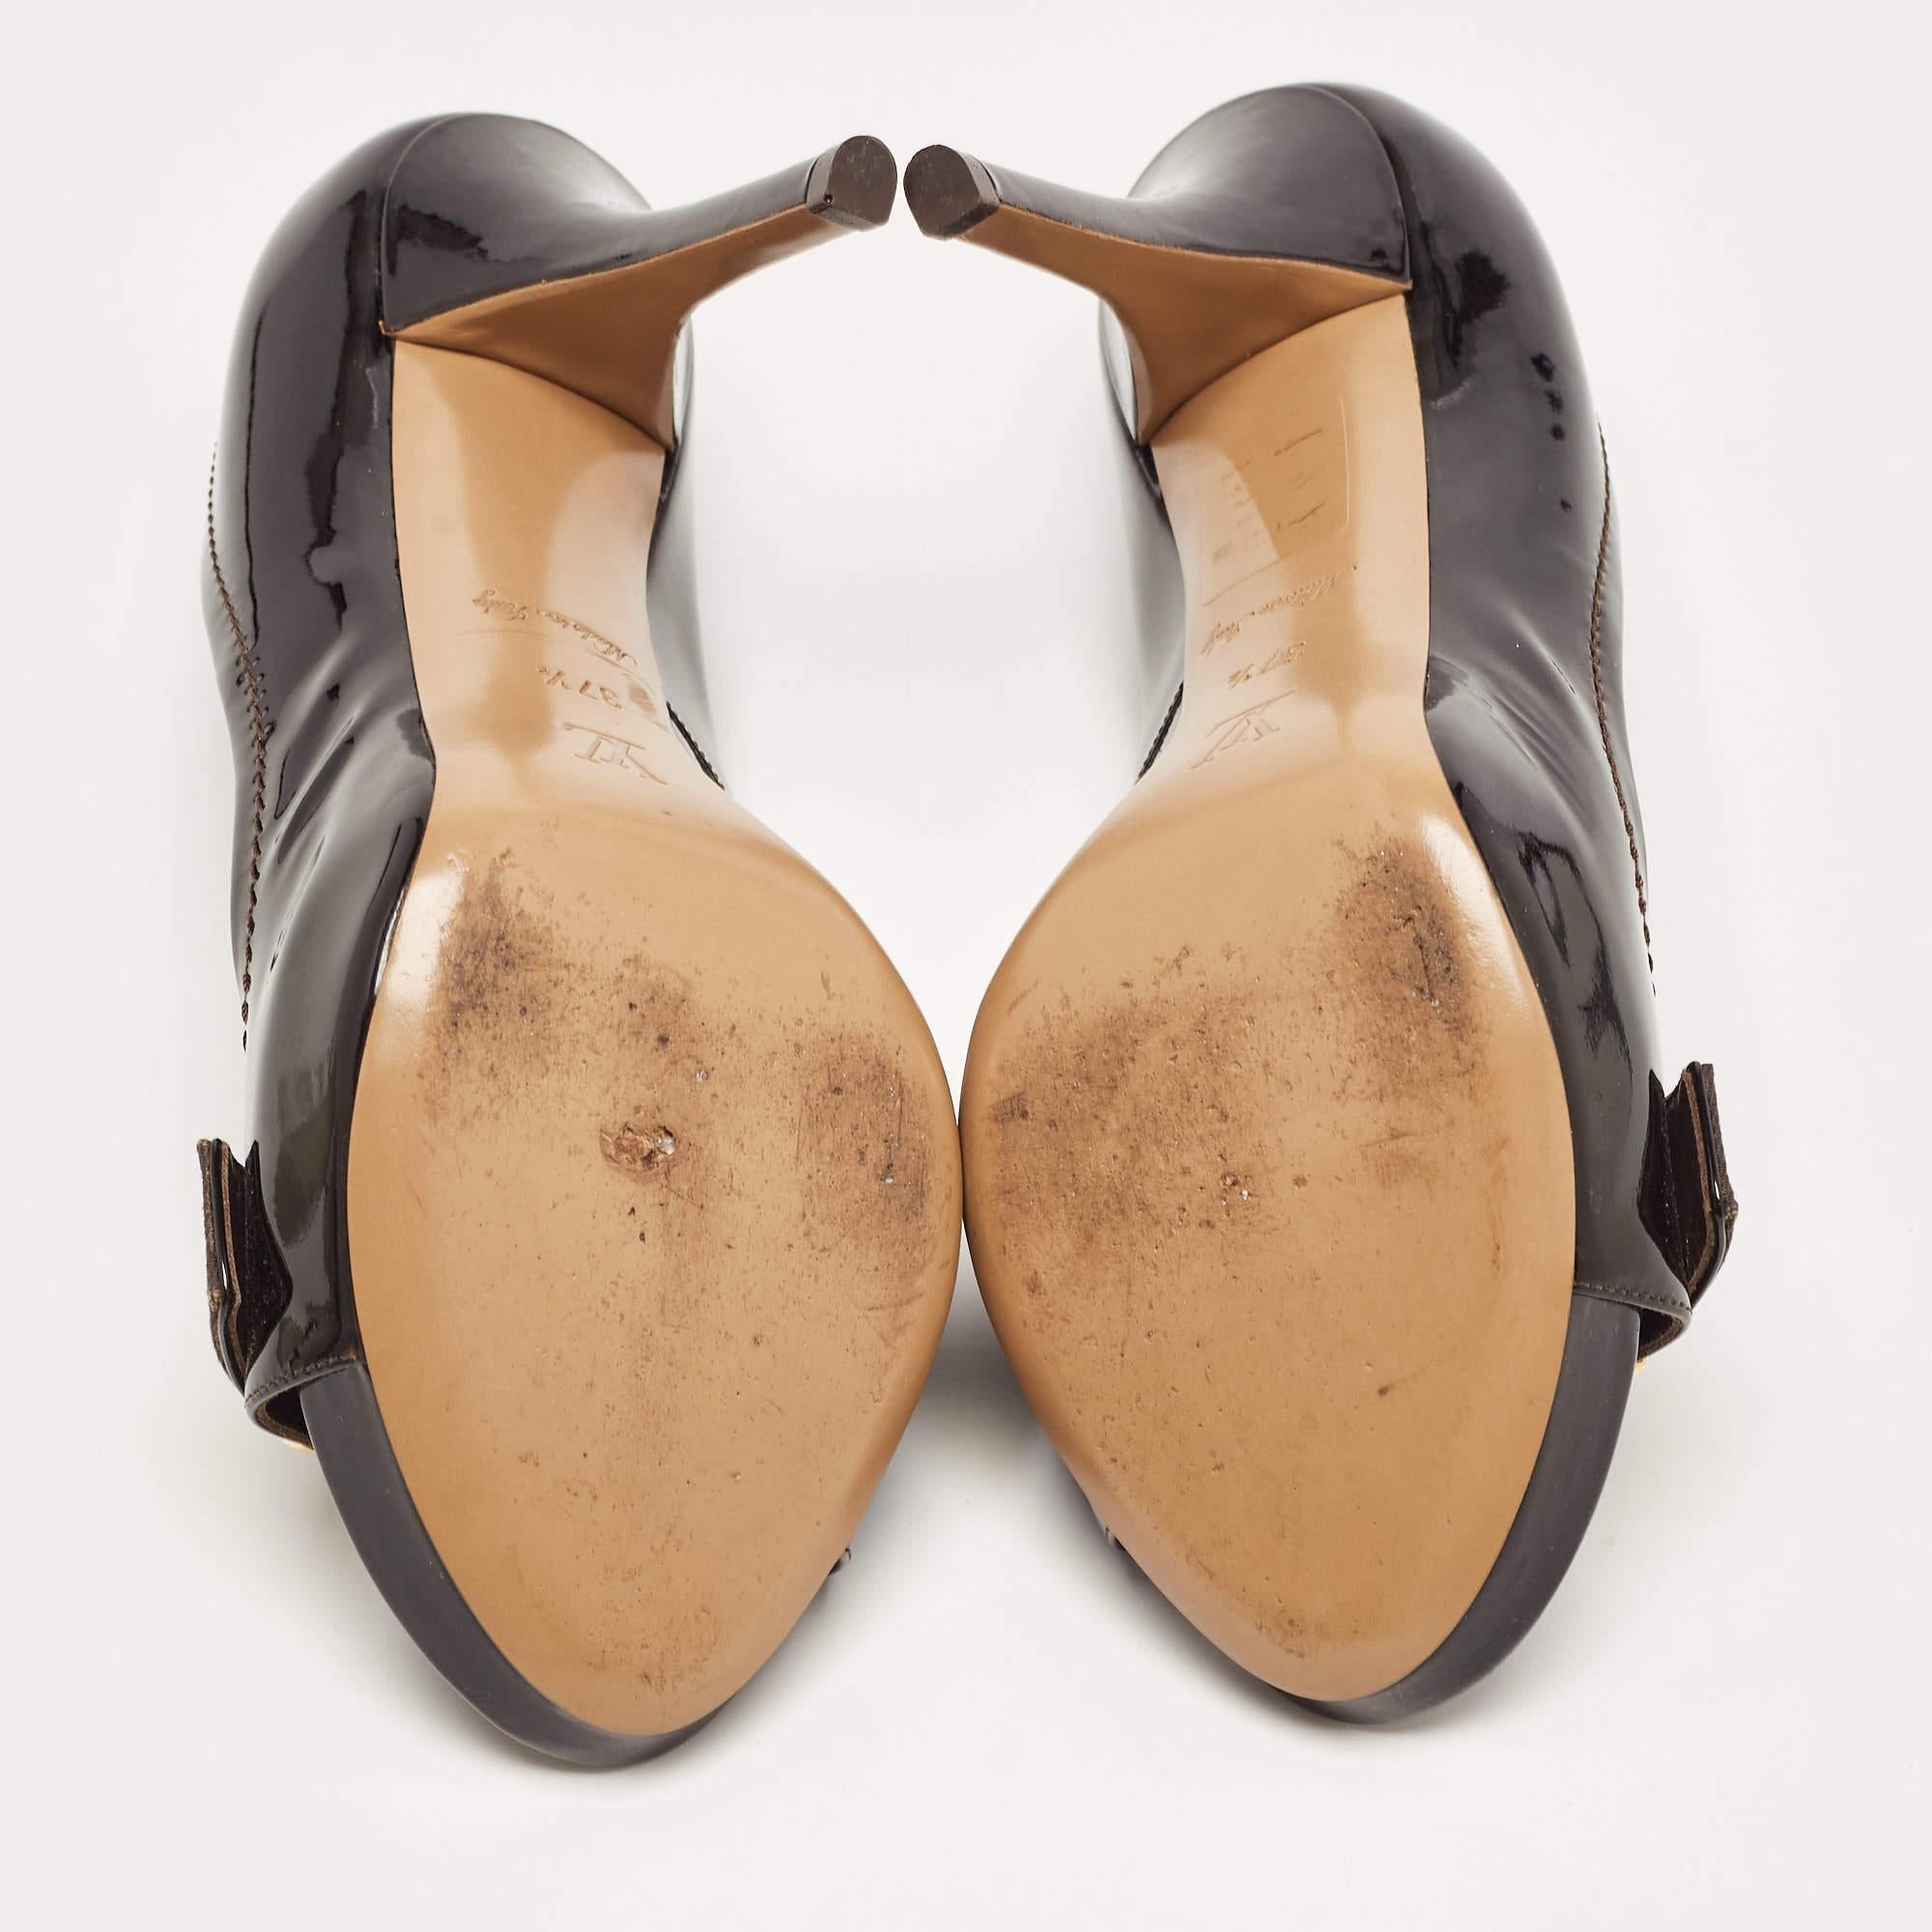 Louis Vuitton Dark Burgundy Patent Leather Open Toe Pumps Size 37.5 For Sale 2